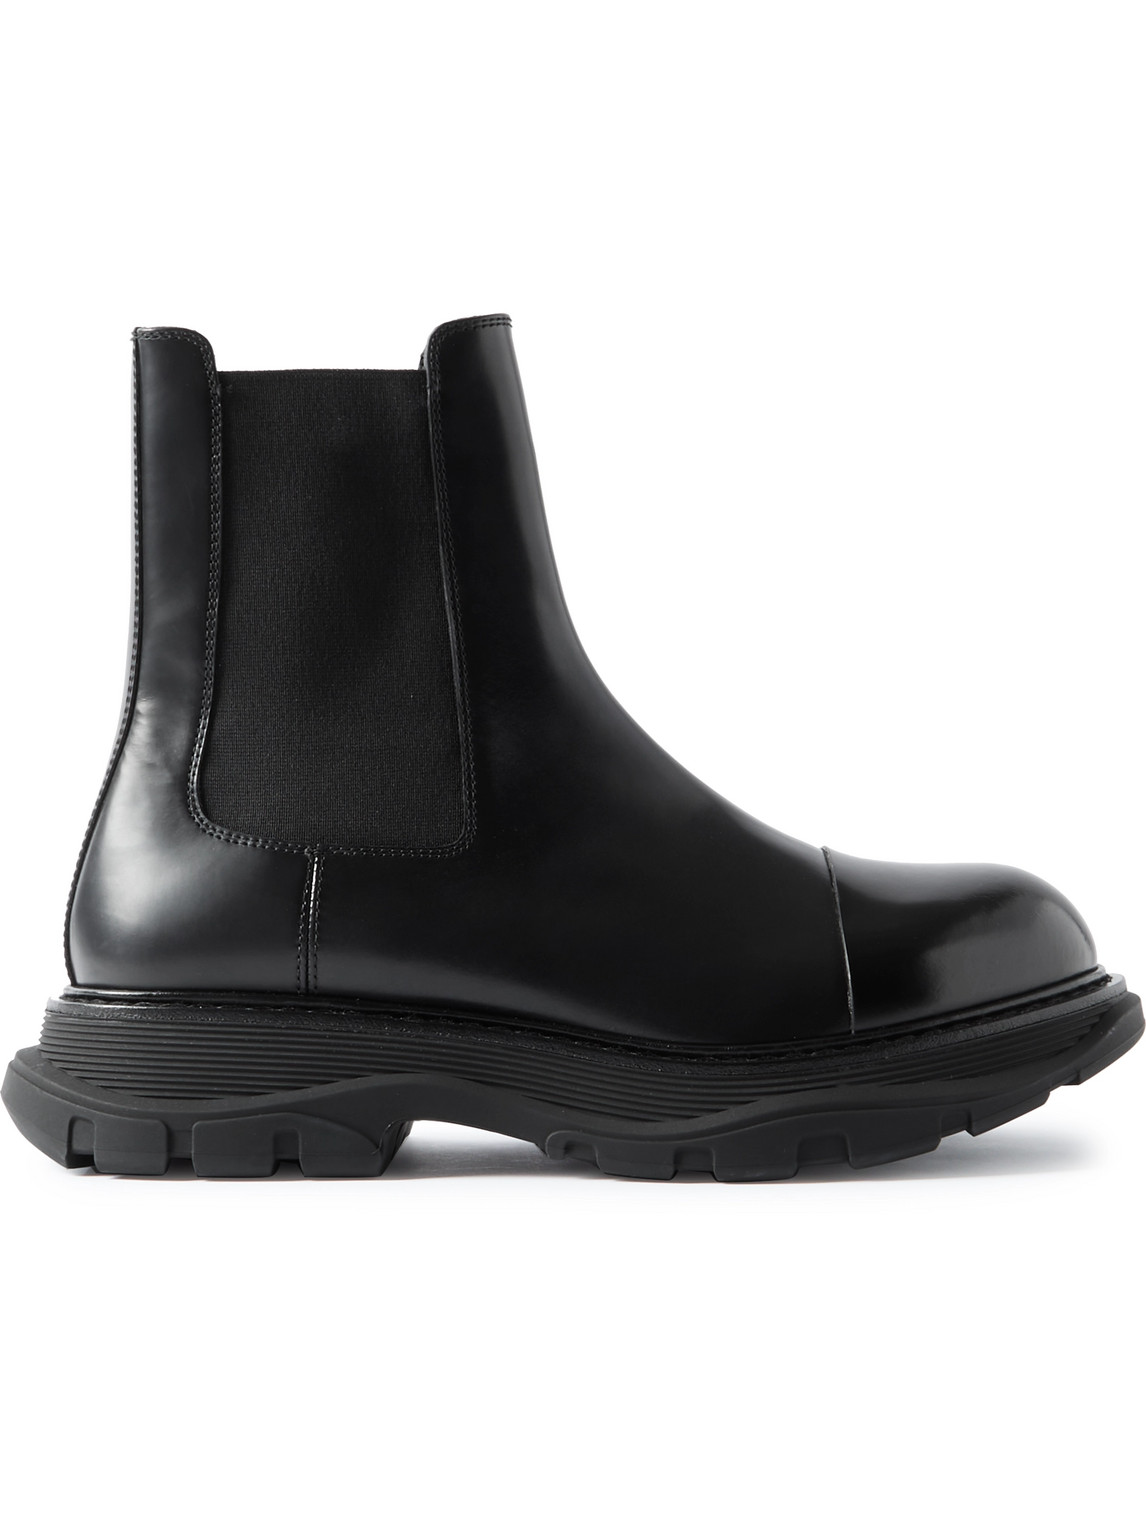 Alexander McQueen - Tread Exaggerated-Sole Leather Chelsea Boots - Men - Black - EU 43 von Alexander McQueen